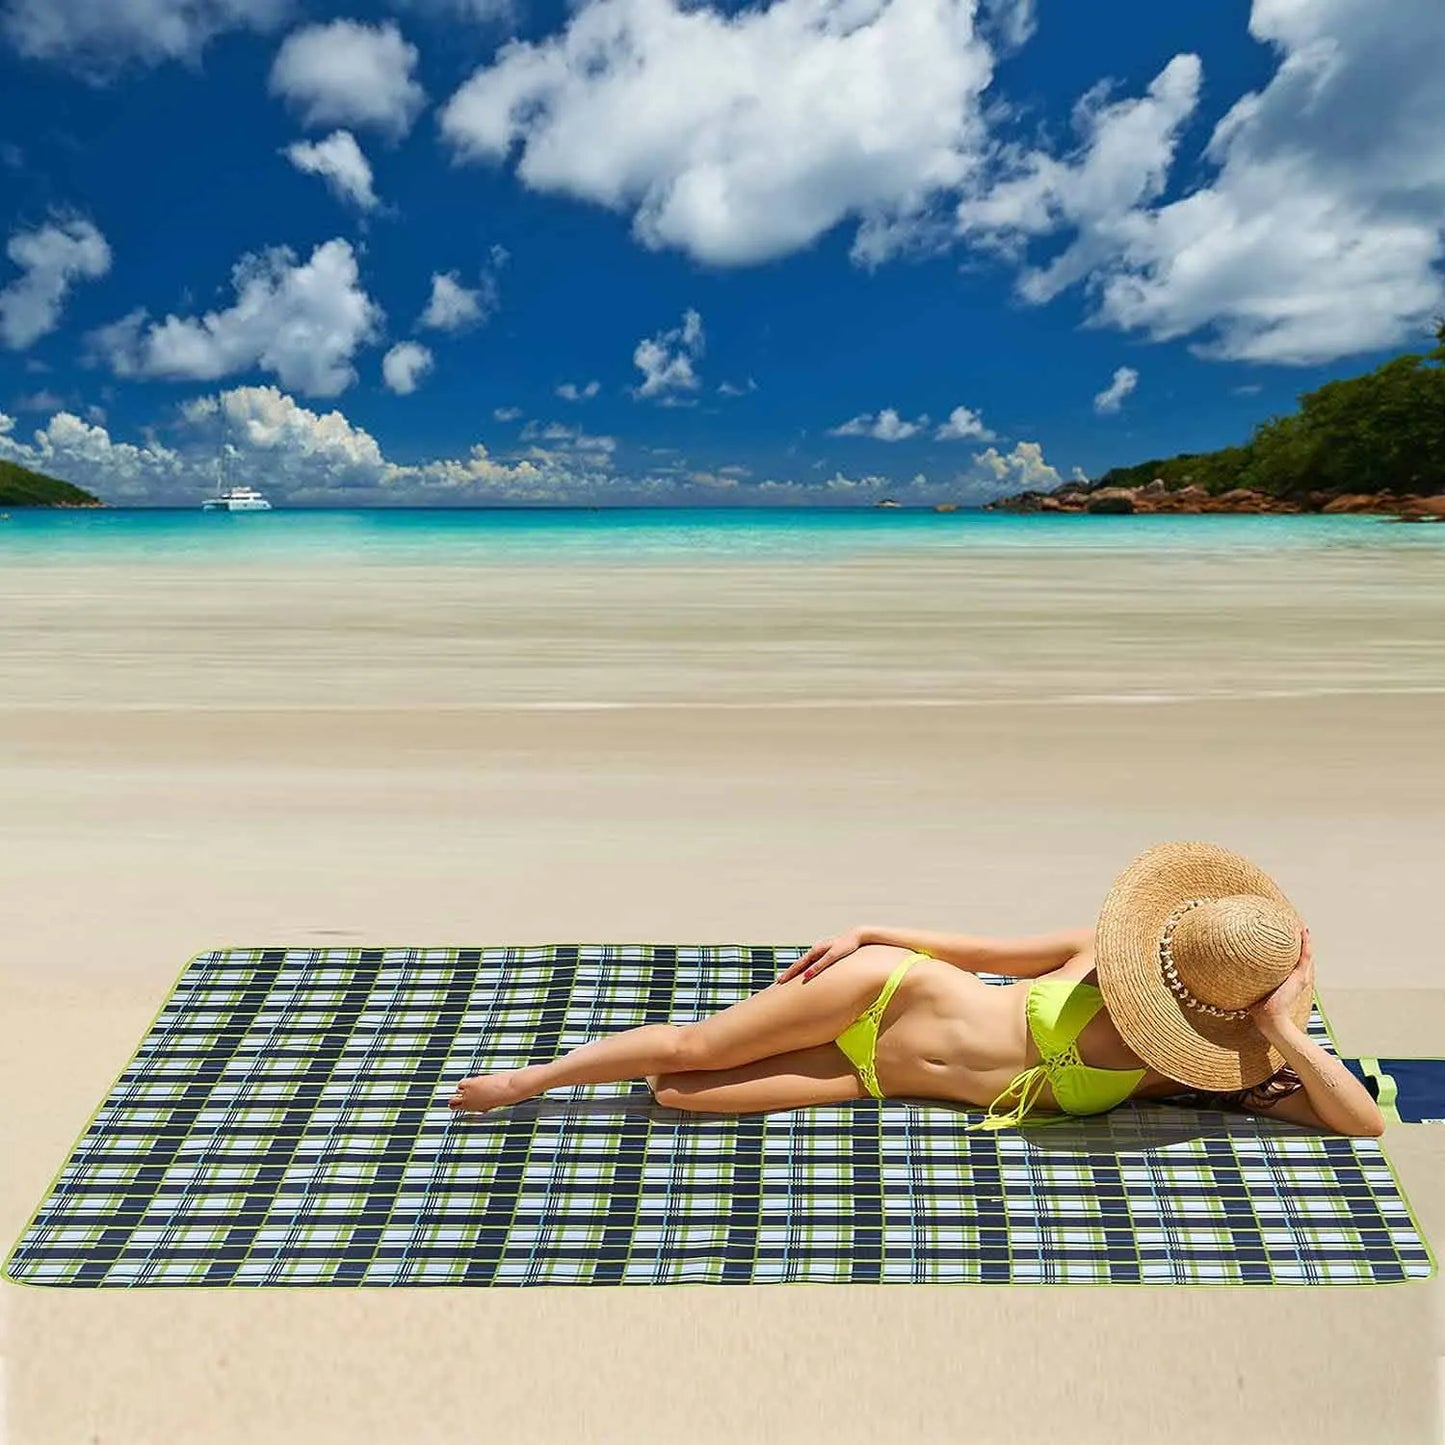 Waterproof Outdoor Picnic Mat Camping Beach Mat Plaid Portable Hiking Travel Sleeping Blanket Folding Grassland Pad Carpet